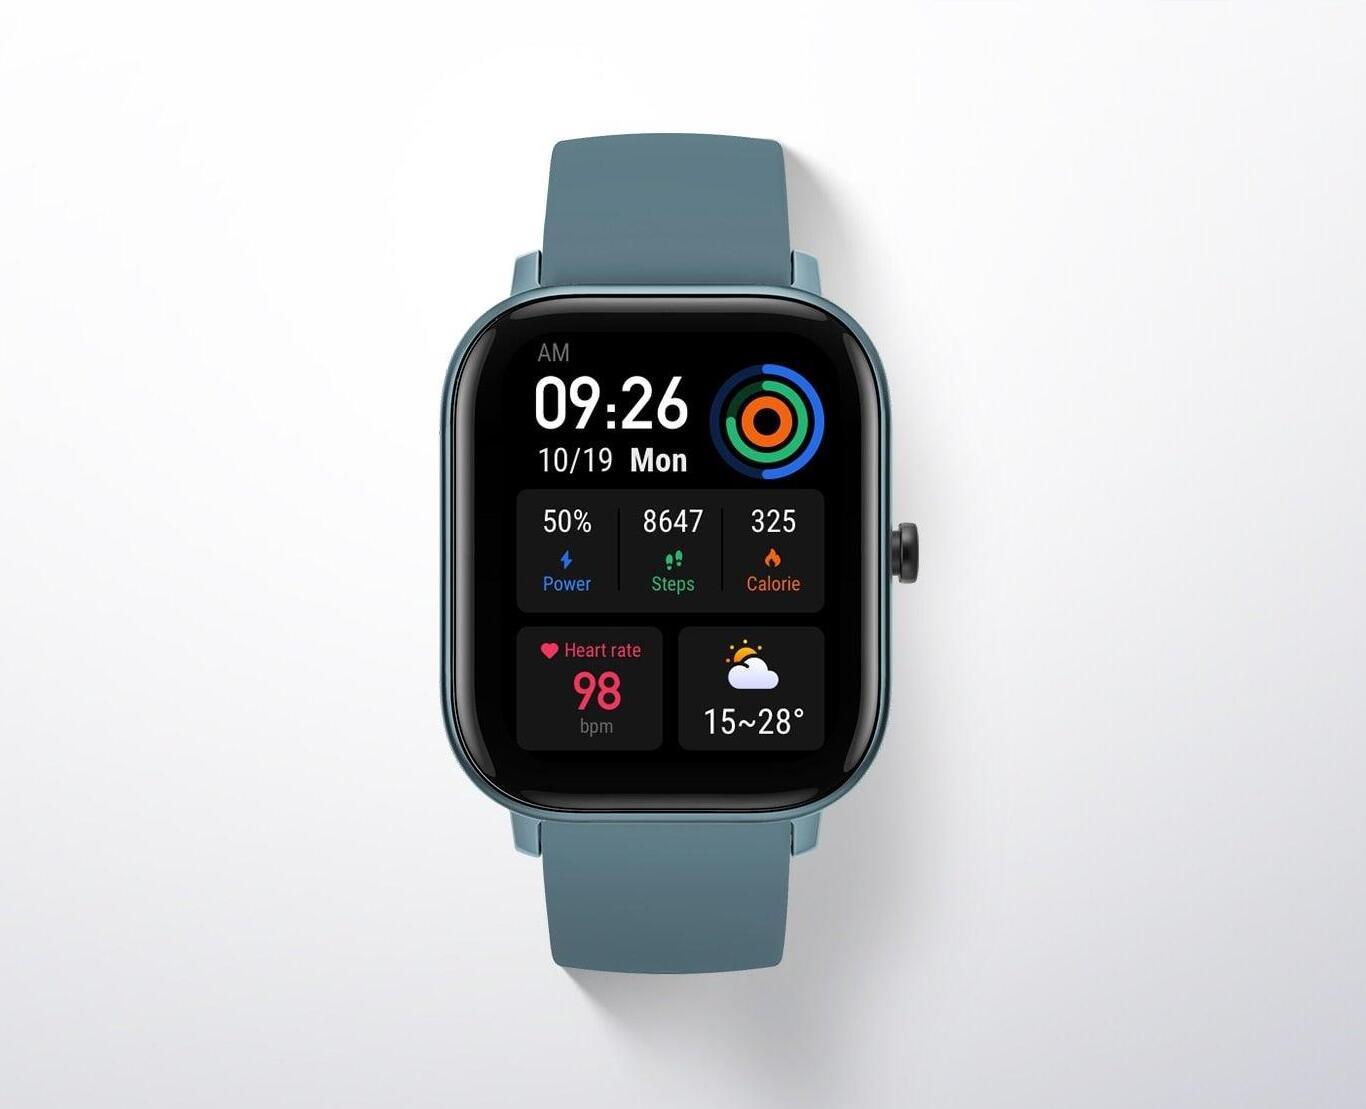 Amazfit GTS Global Smartwatch (5ATM Waterproof, 14 Days Battery) - deviceUPS